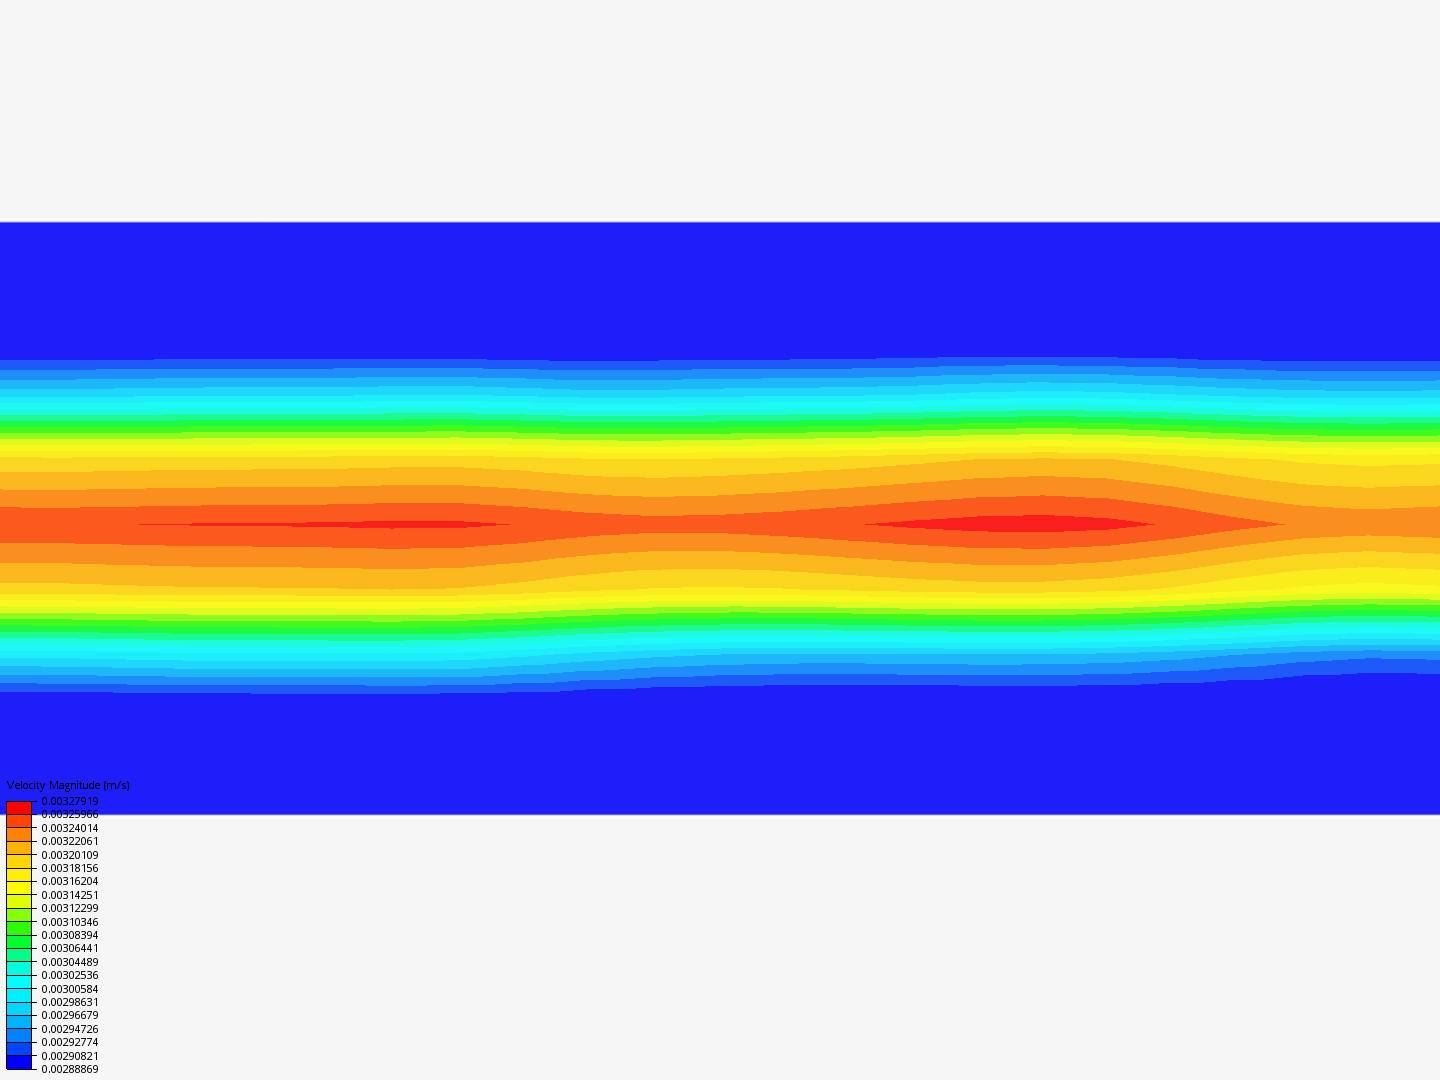 Microfluidics channel image